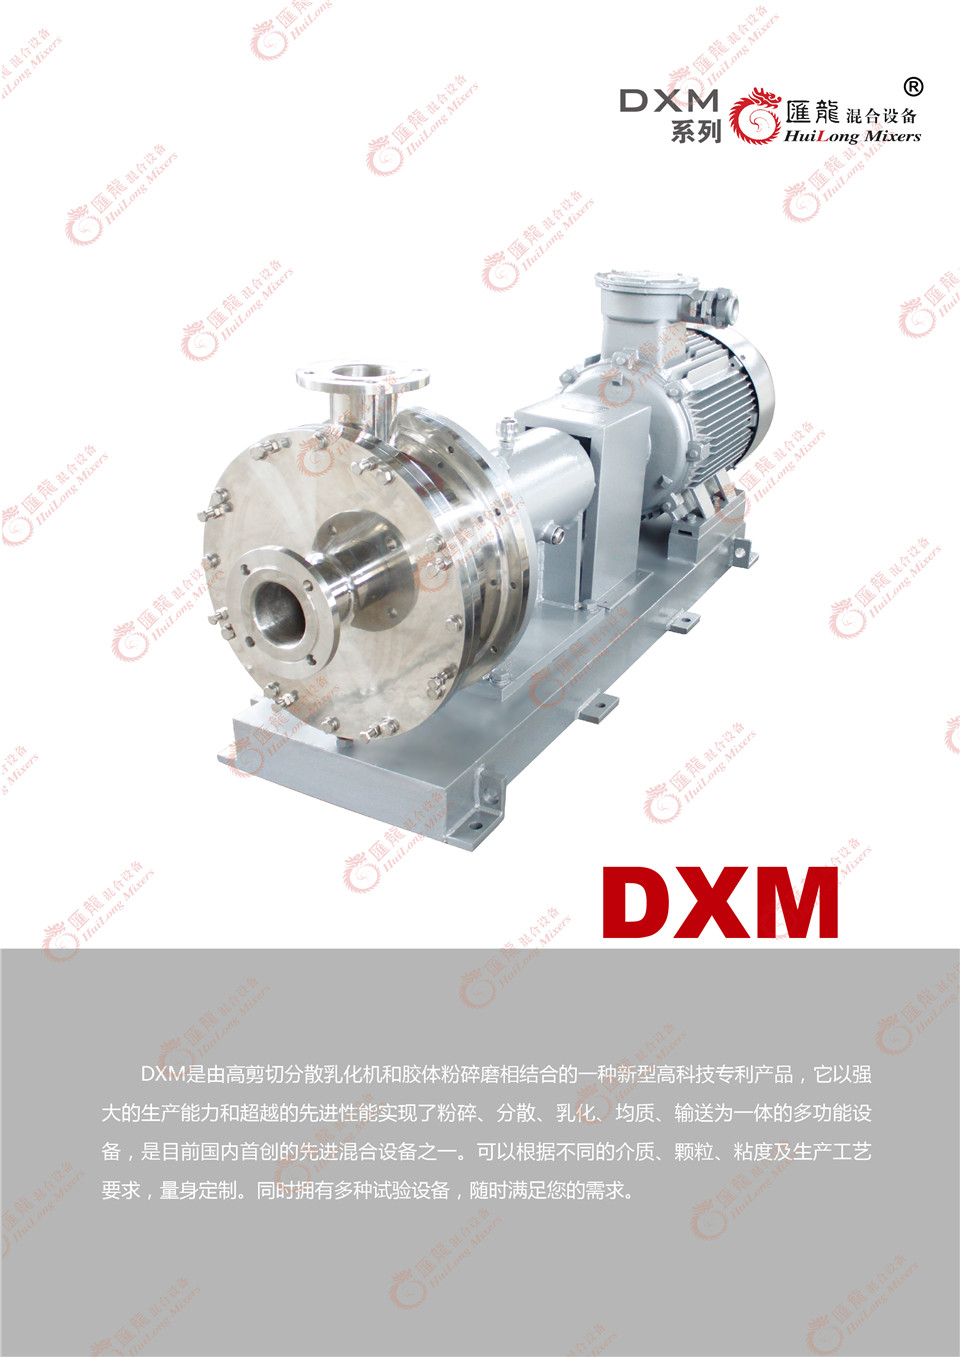 “DXM-普通型乳化机”